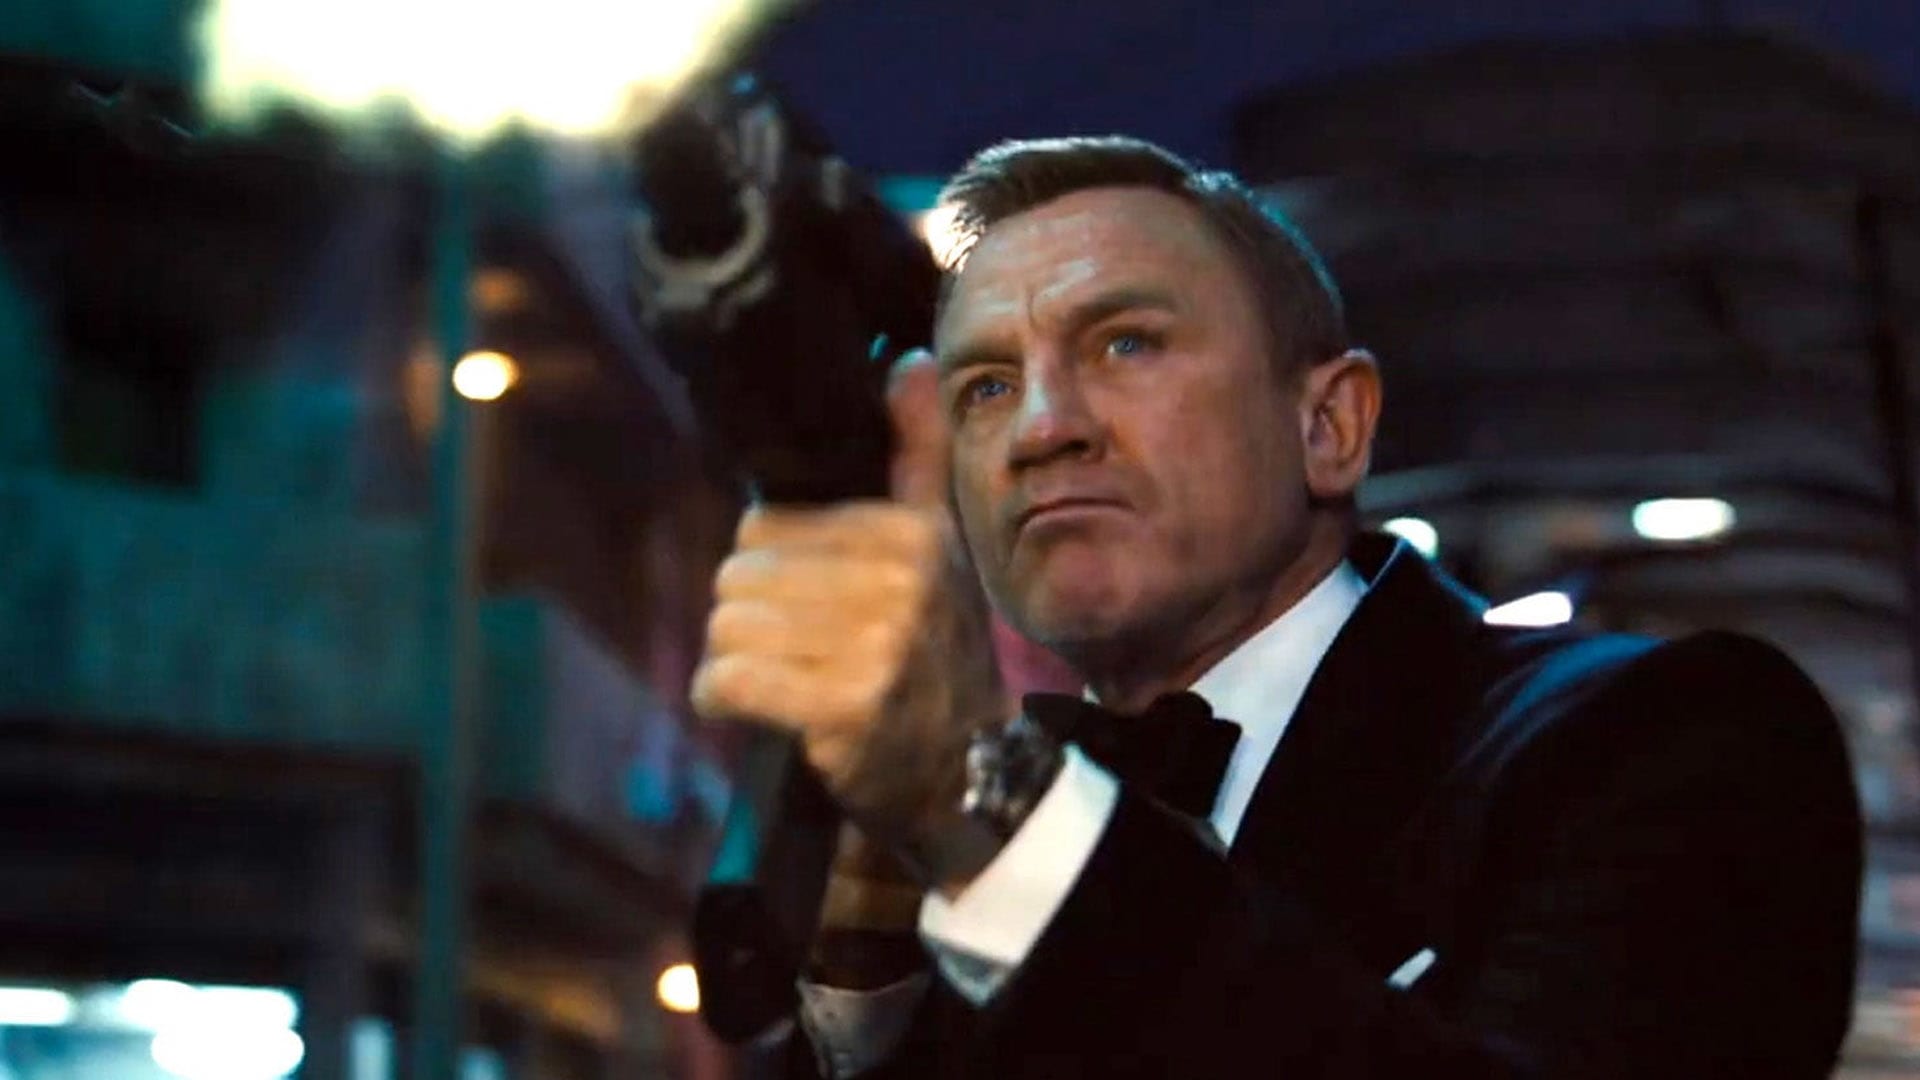 James Bond v podání Daniela Craiga